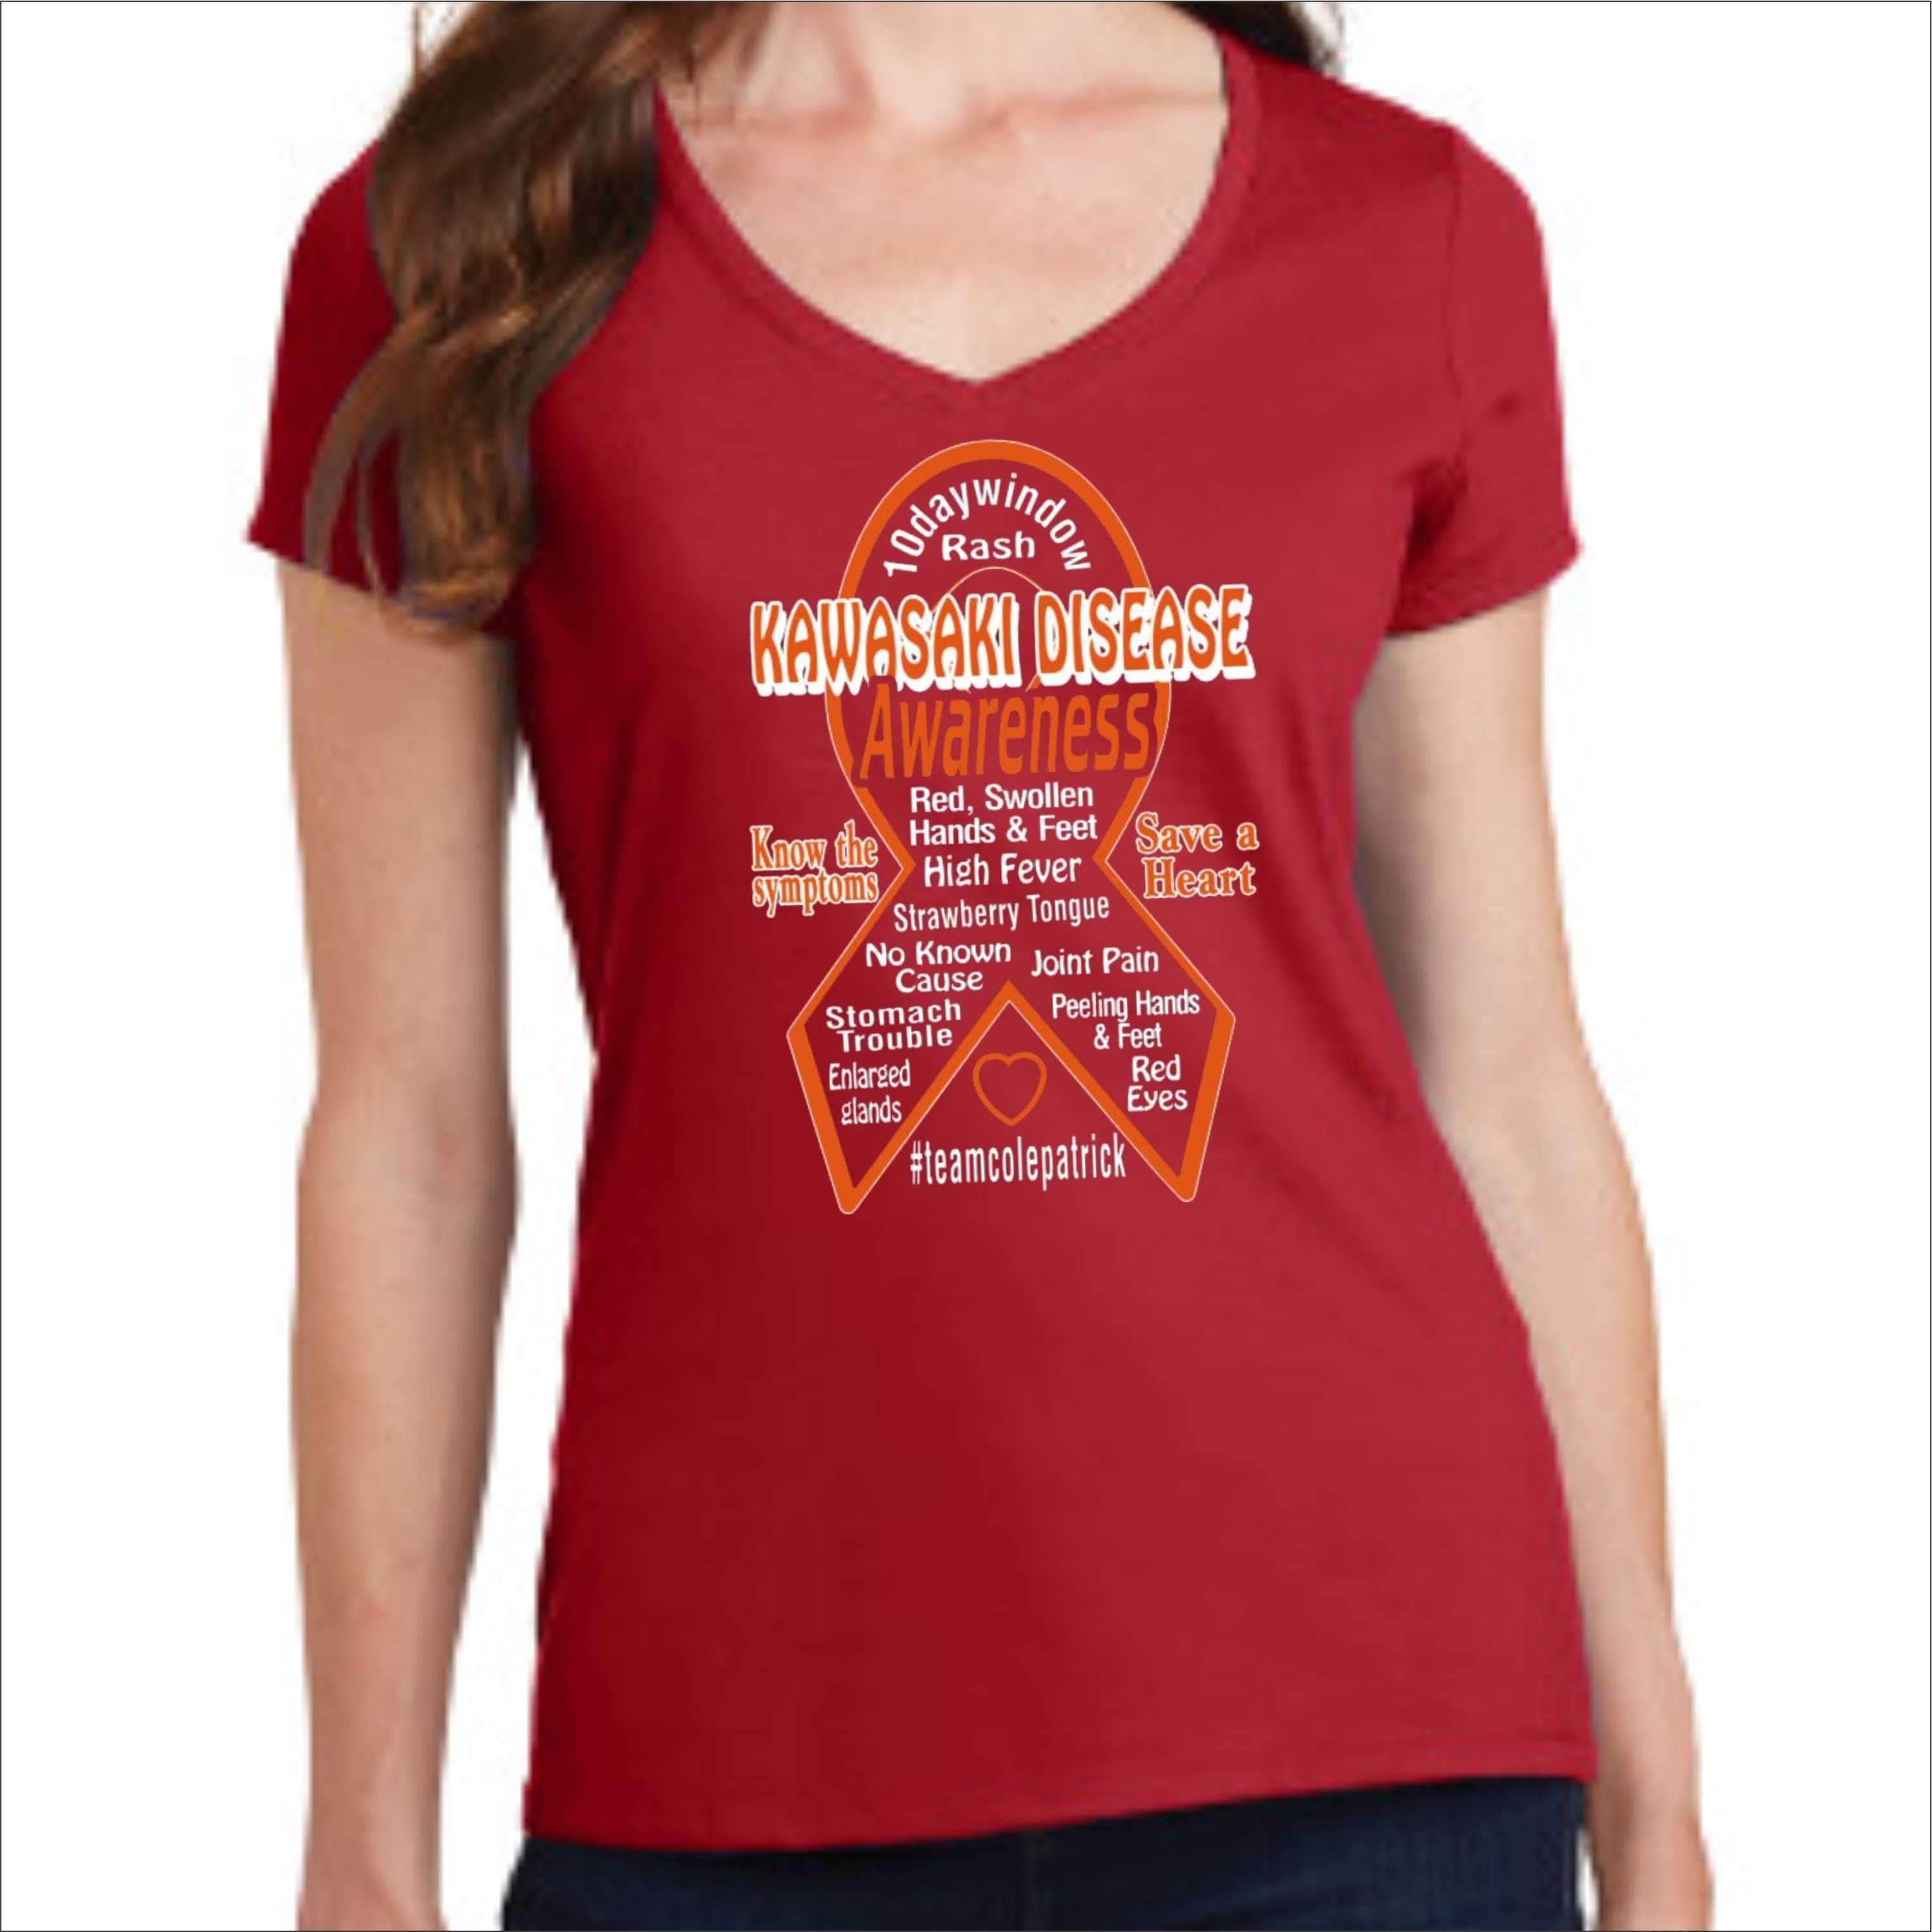 Kawasaki Disease Awareness Ladies Short Sleeve V-neck Screen Printed T-shirt Causes & Awareness Becky's Boutique Adult Small 